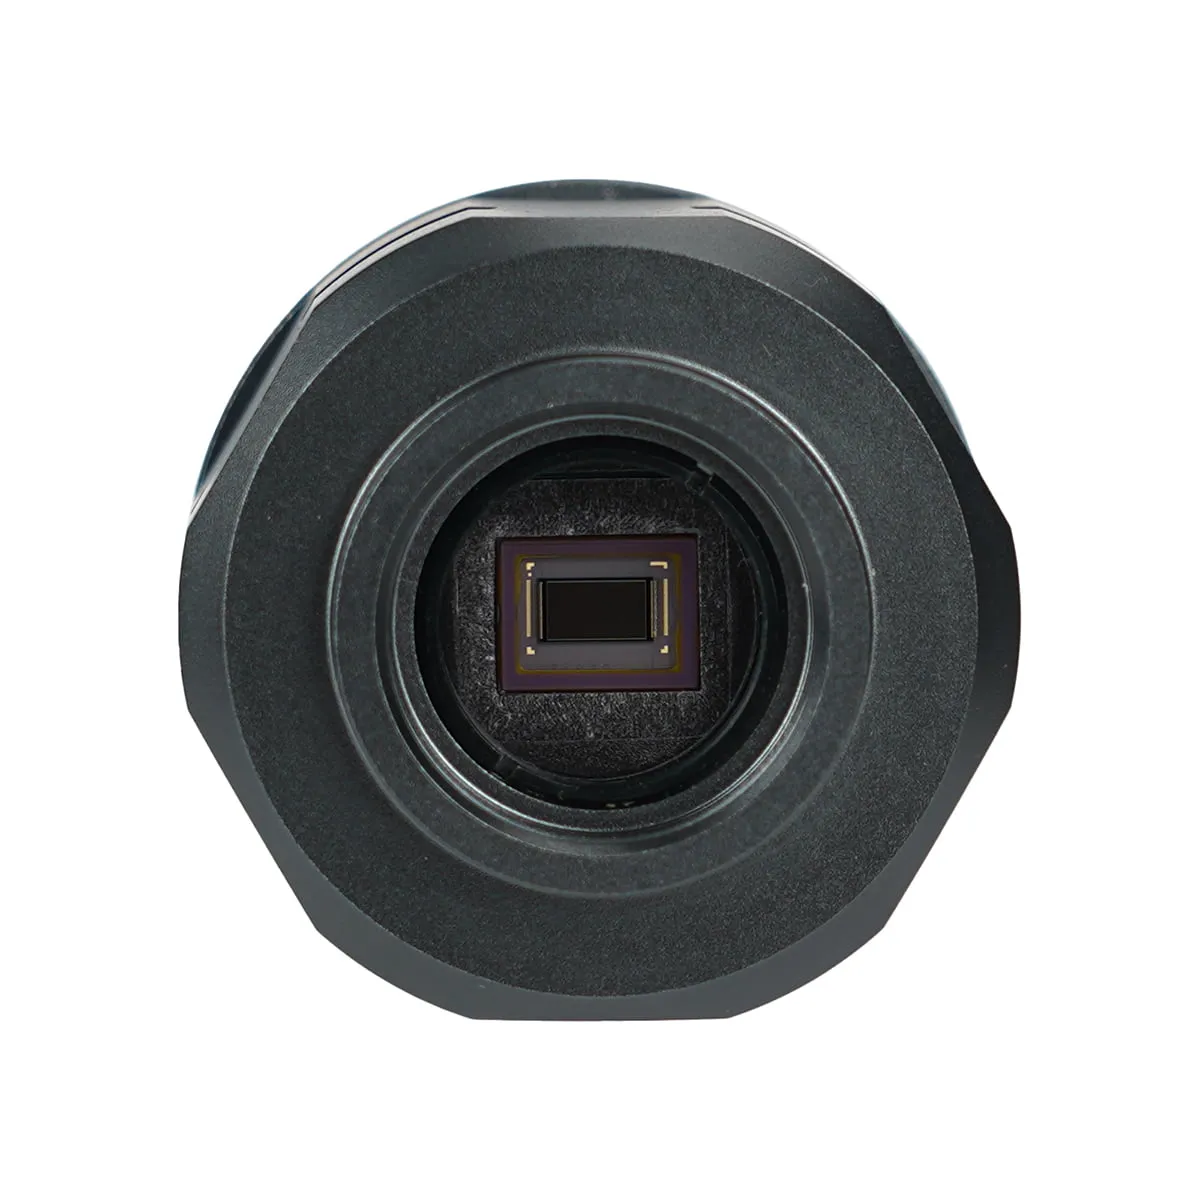 SVBONY SV305C 惑星カメラ USB2.0 カラーカメラ  惑星観測 IMX662 1.25インチ天文カメラ、取り外し可能なUV IRカットガラスを備えた 天体写真やEAAに最適